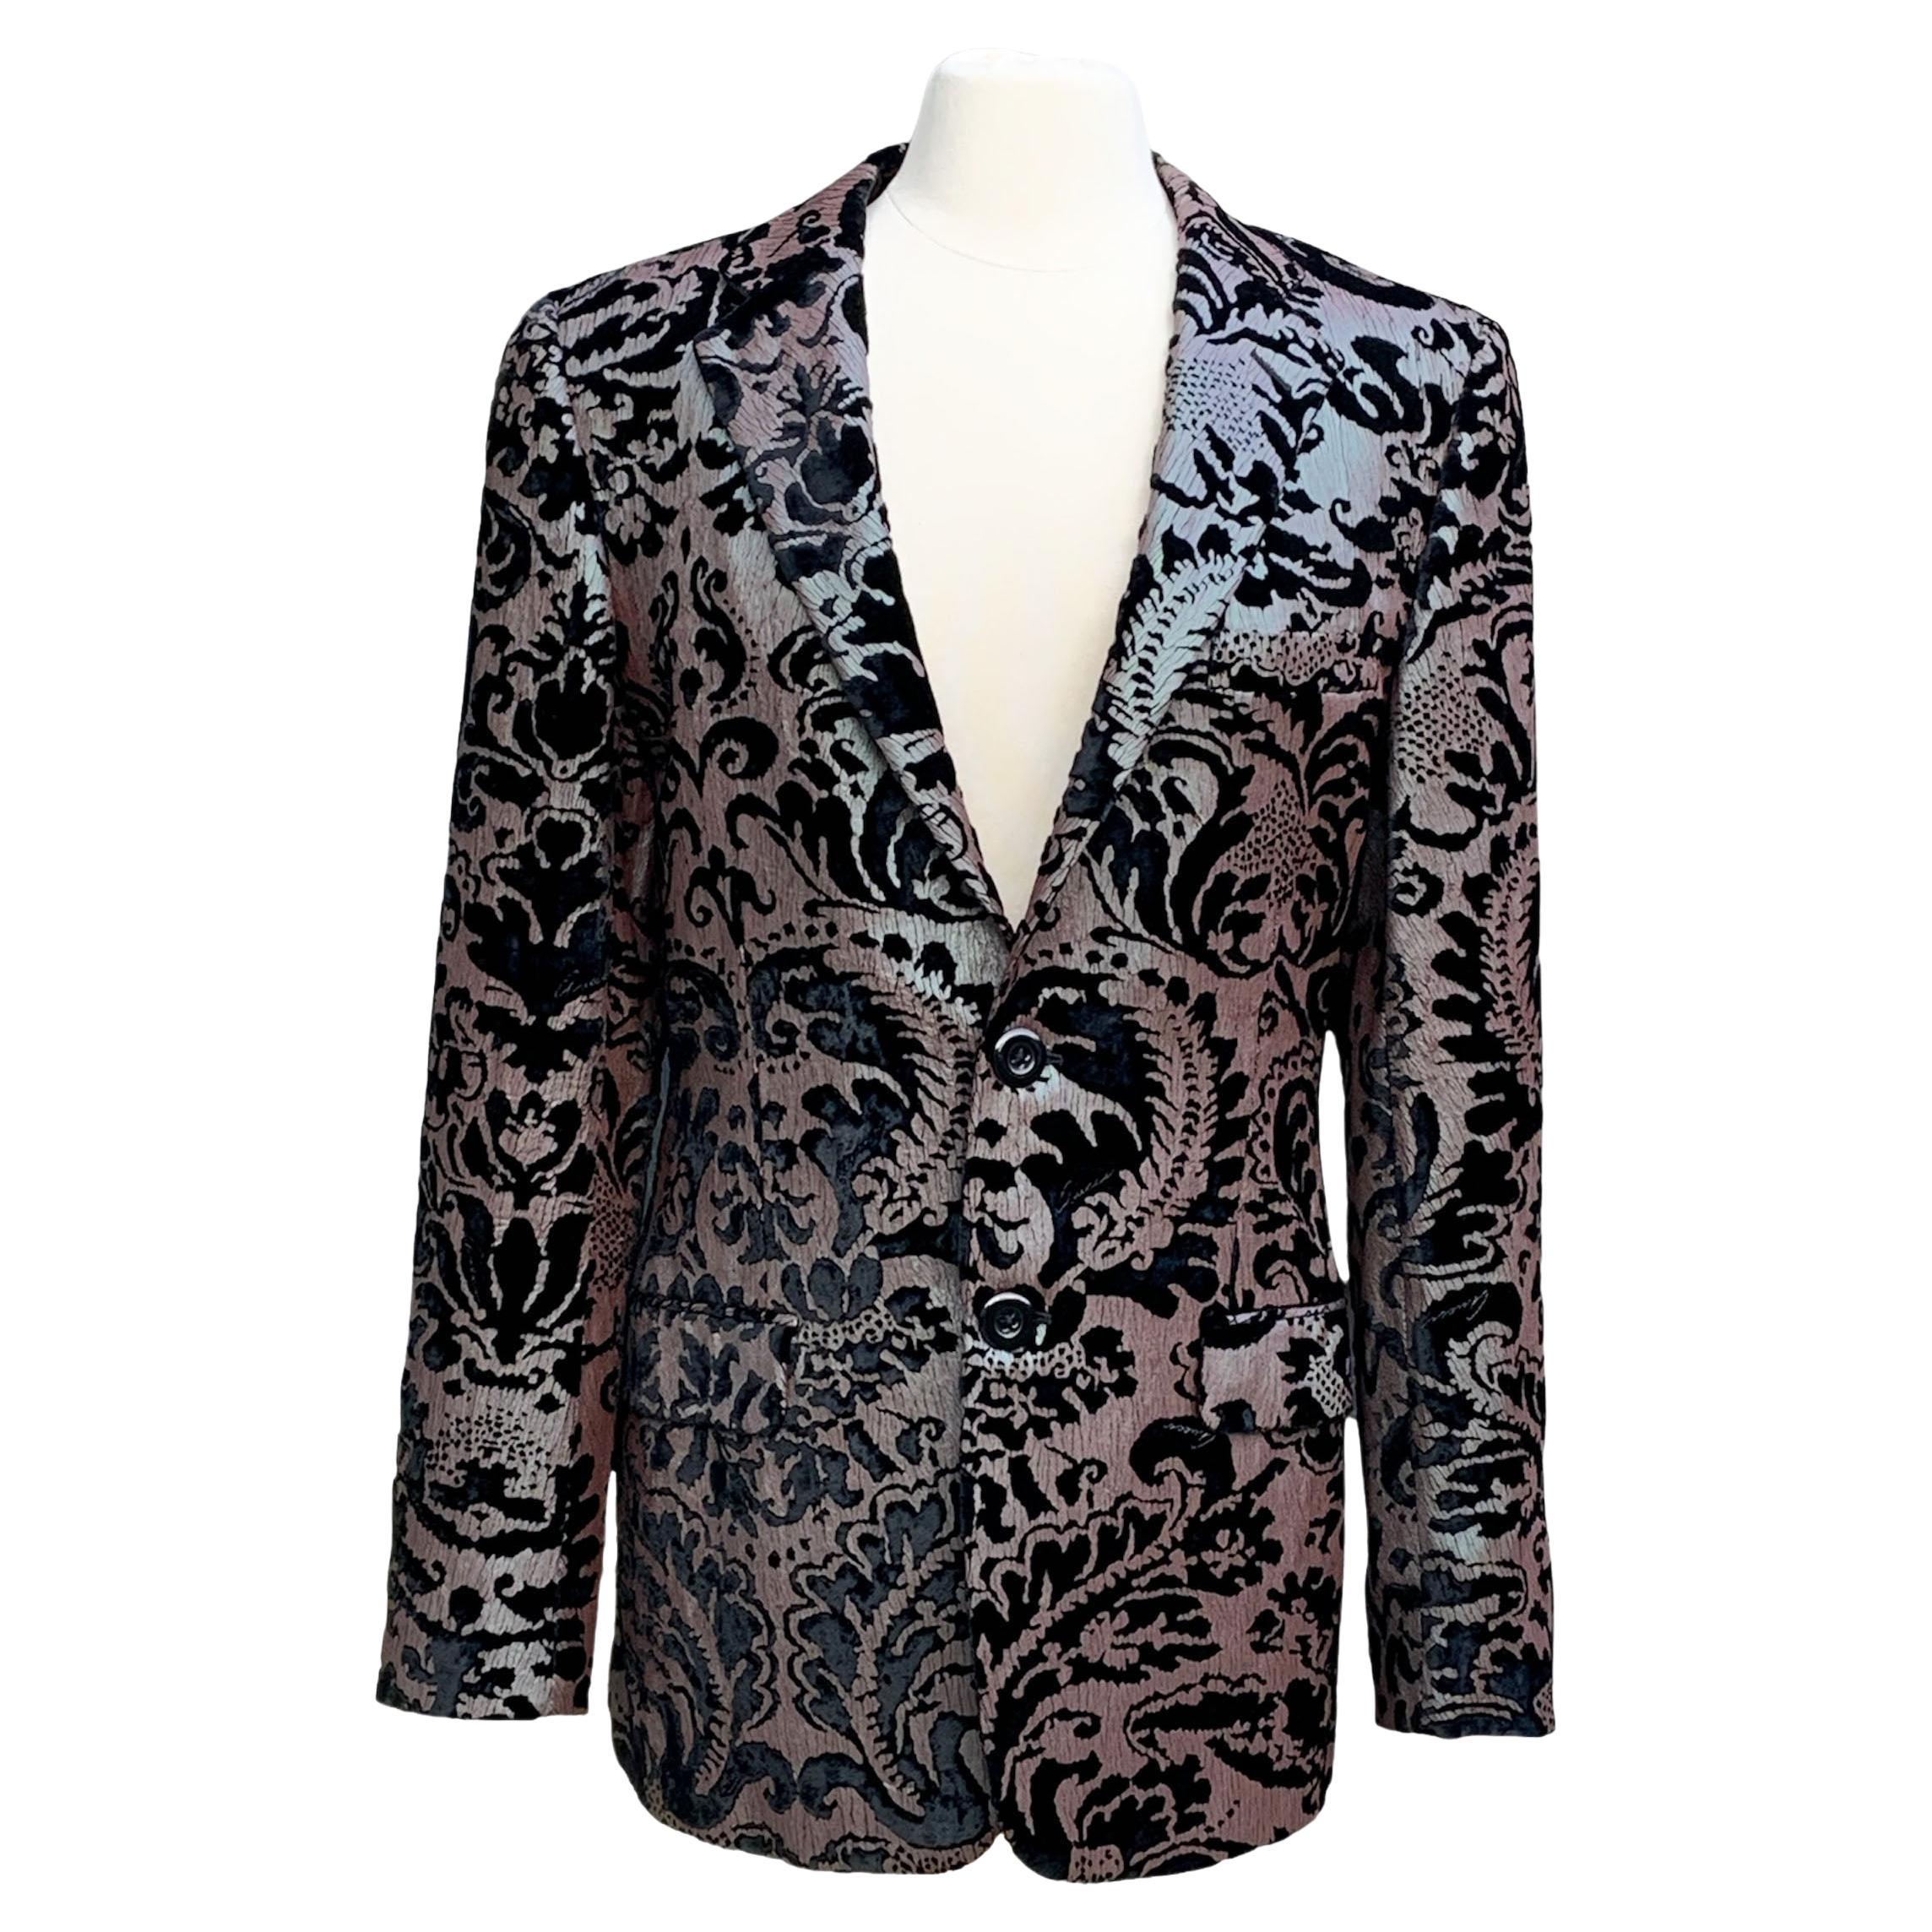 Tom Ford for Gucci SS 2000 Gothic Damask Iridescent Paint Velvet Blazer 48 US 38 For Sale